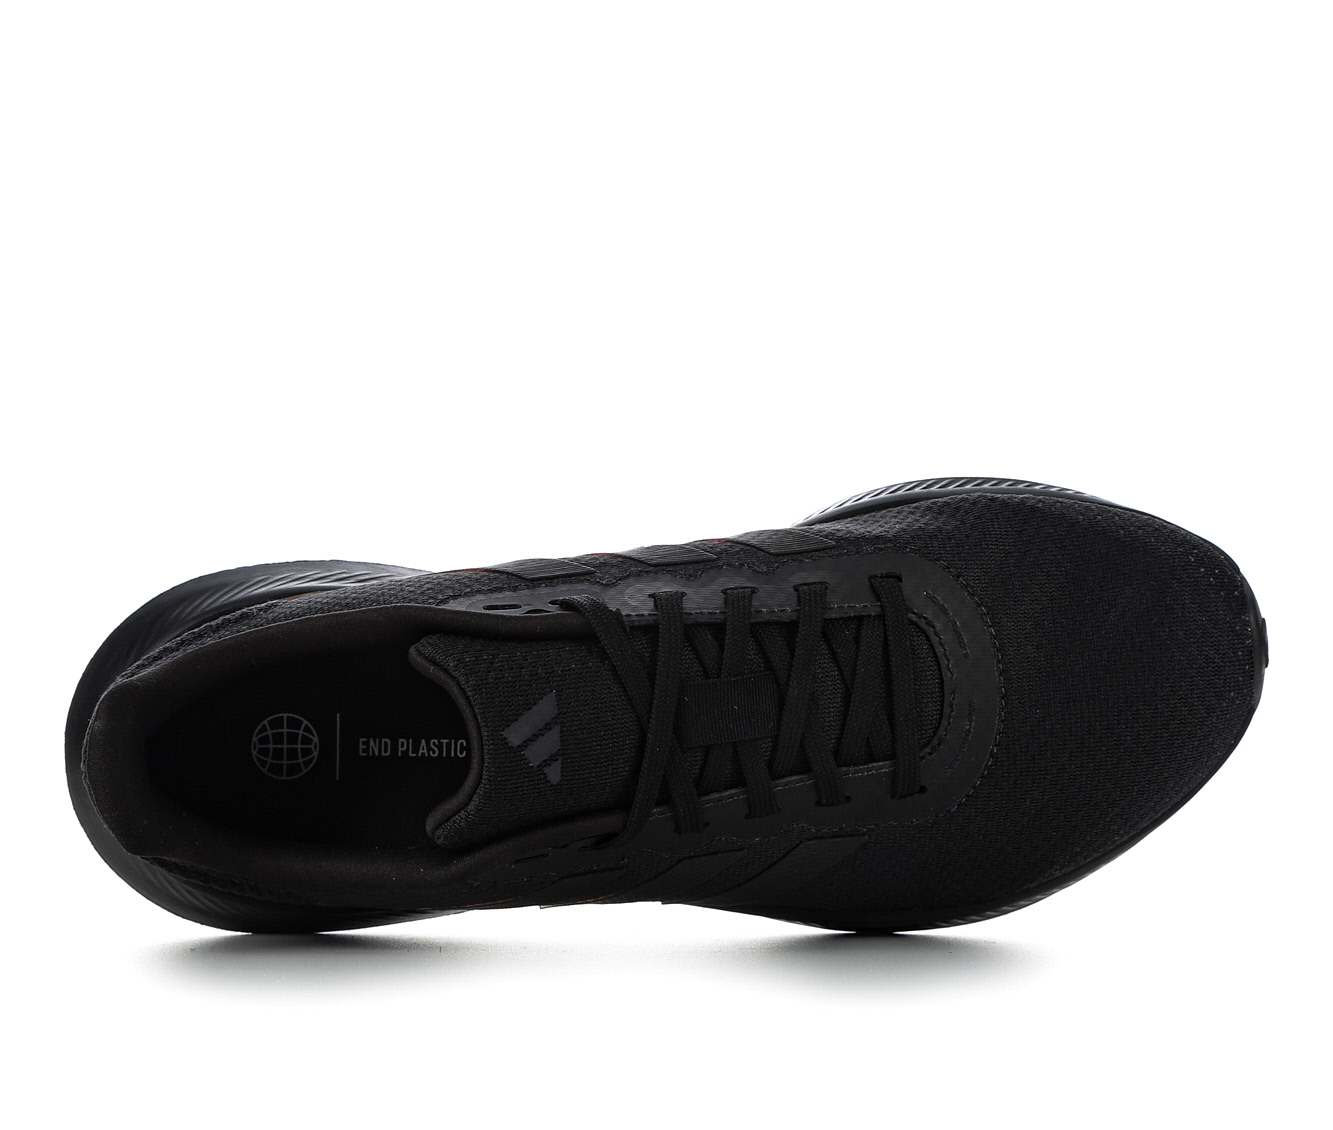 Adidas Tennis Shoes | Shoe Carnival